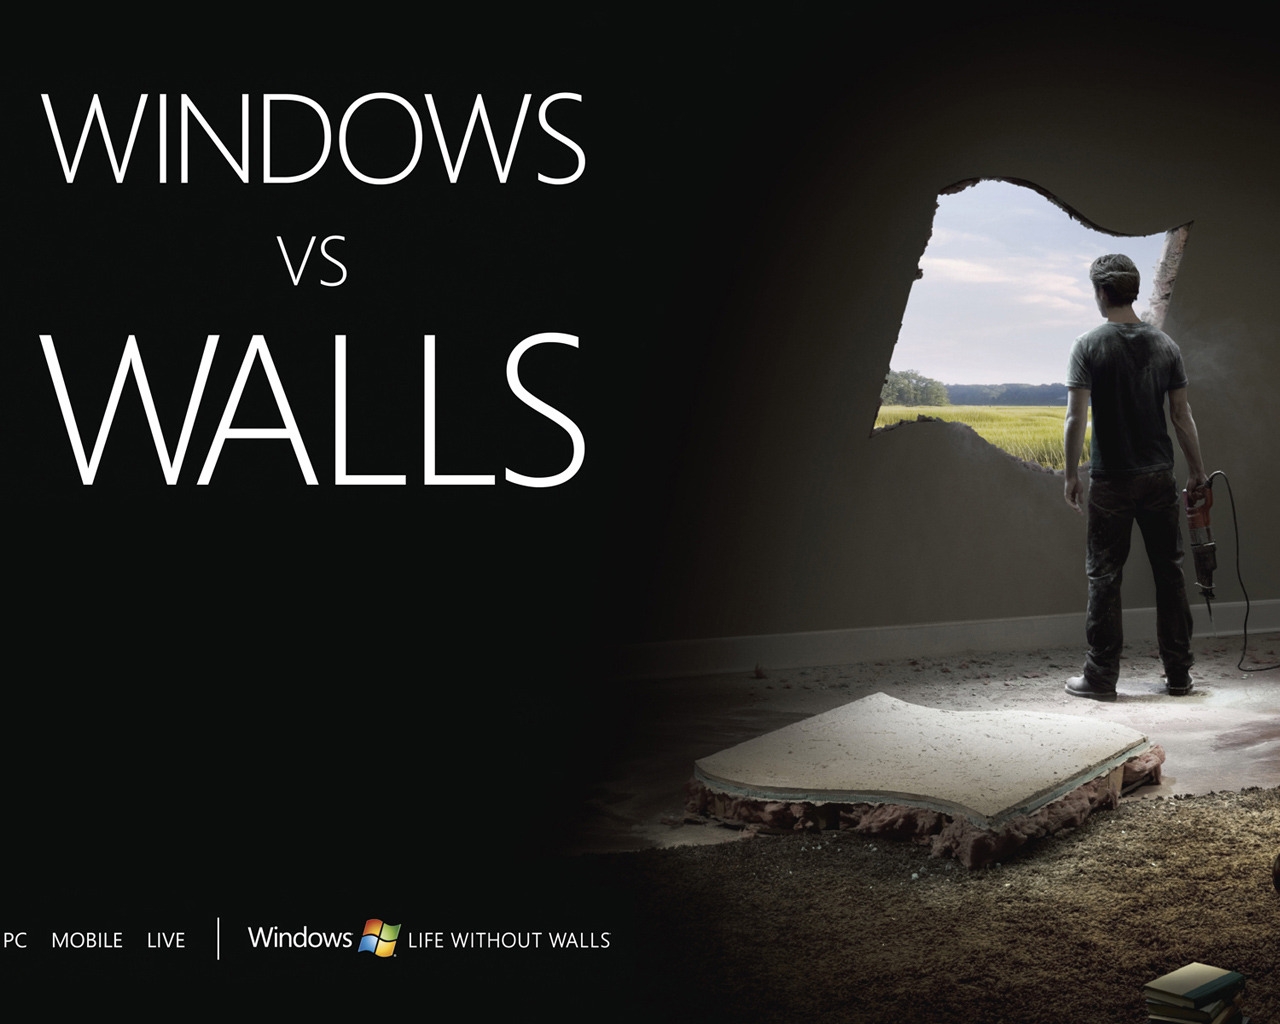 Windows vs Walls for 1280 x 1024 resolution